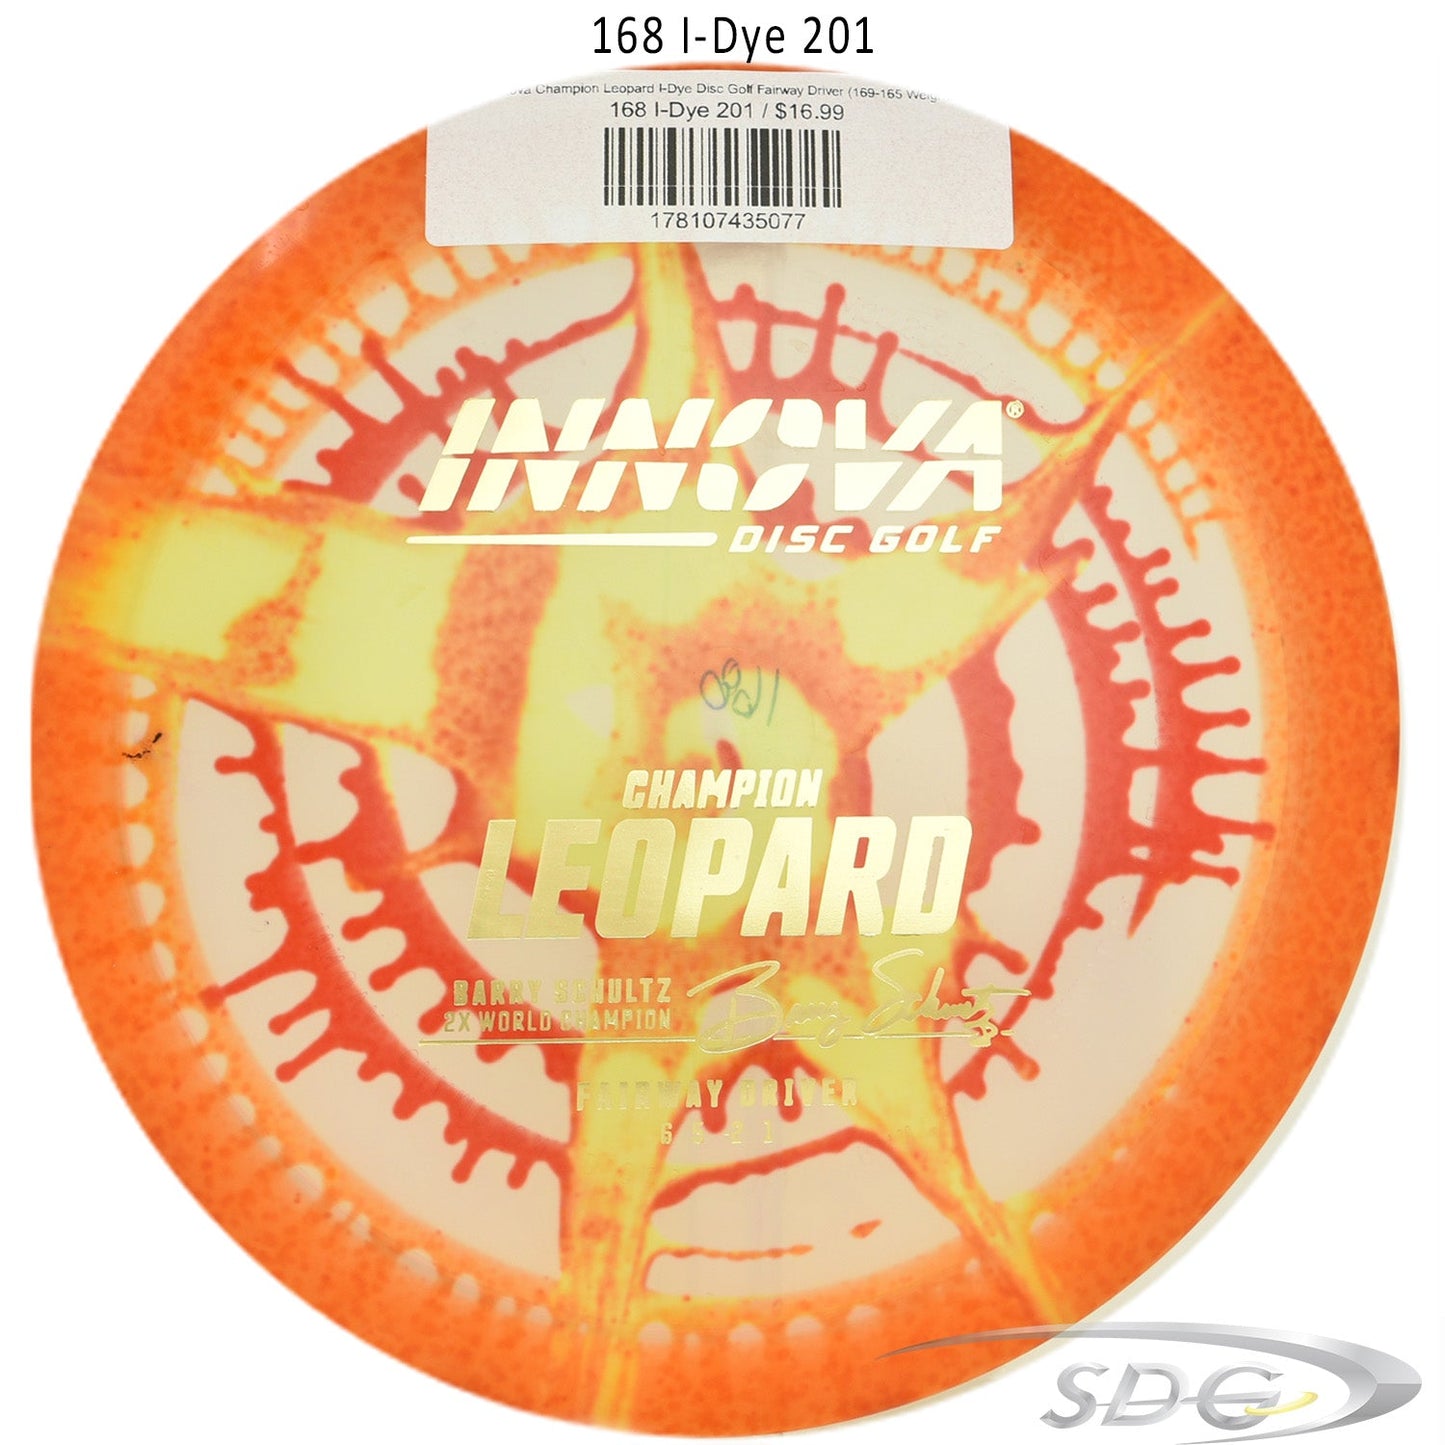 innova-champion-leopard-i-dye-disc-golf-fairway-driver 168 I-Dye 201 